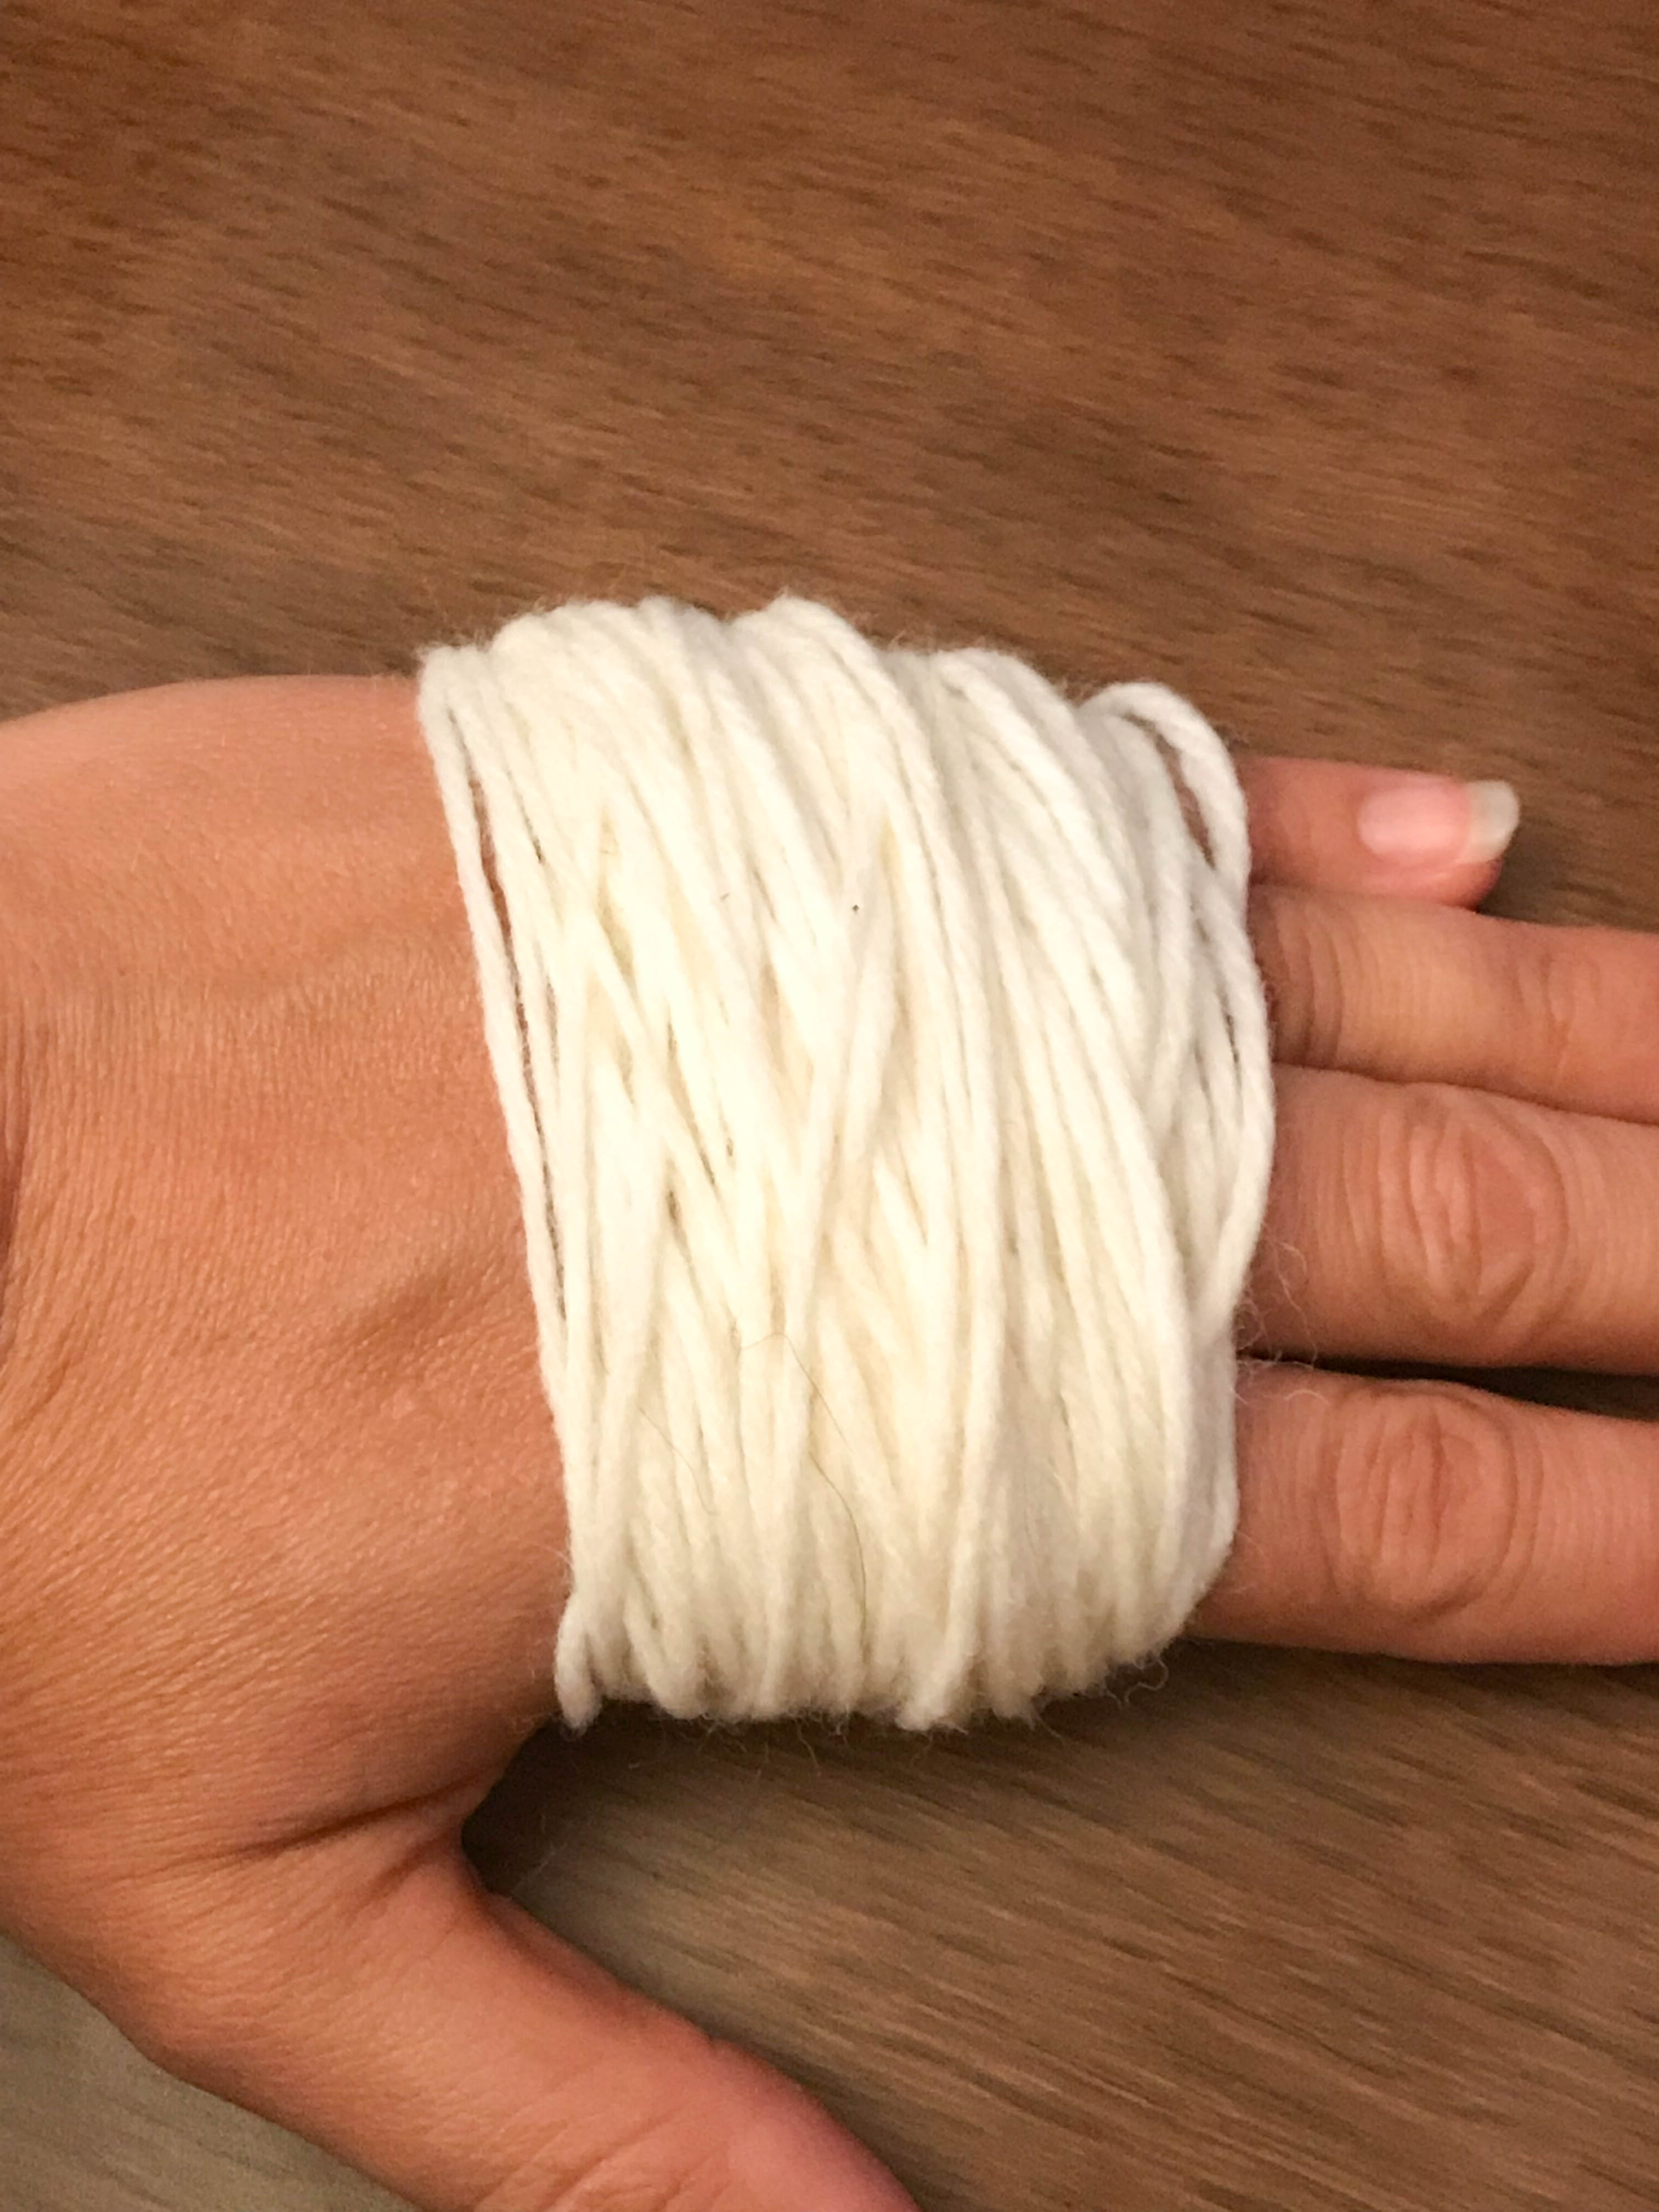 yarn wrapped around a hand